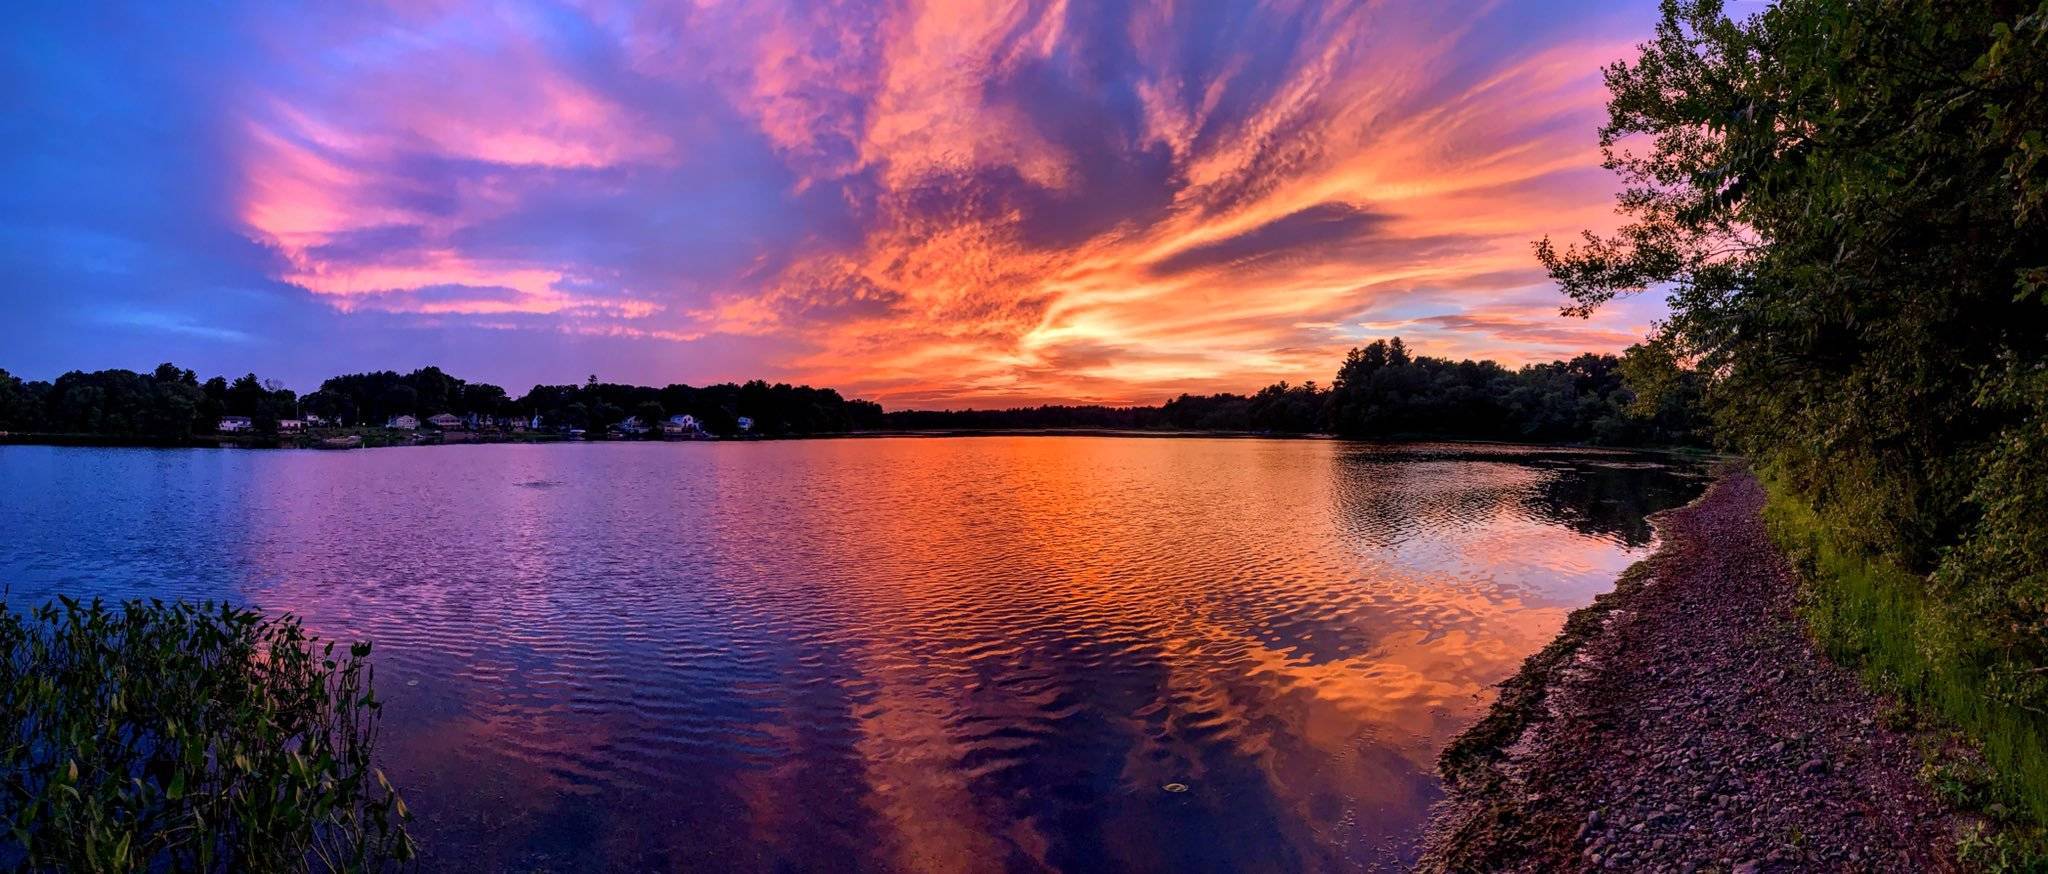 2nd Place Sunset in Georgetown, Massachusetts by Stephanie Glennon @SMartinGlennon